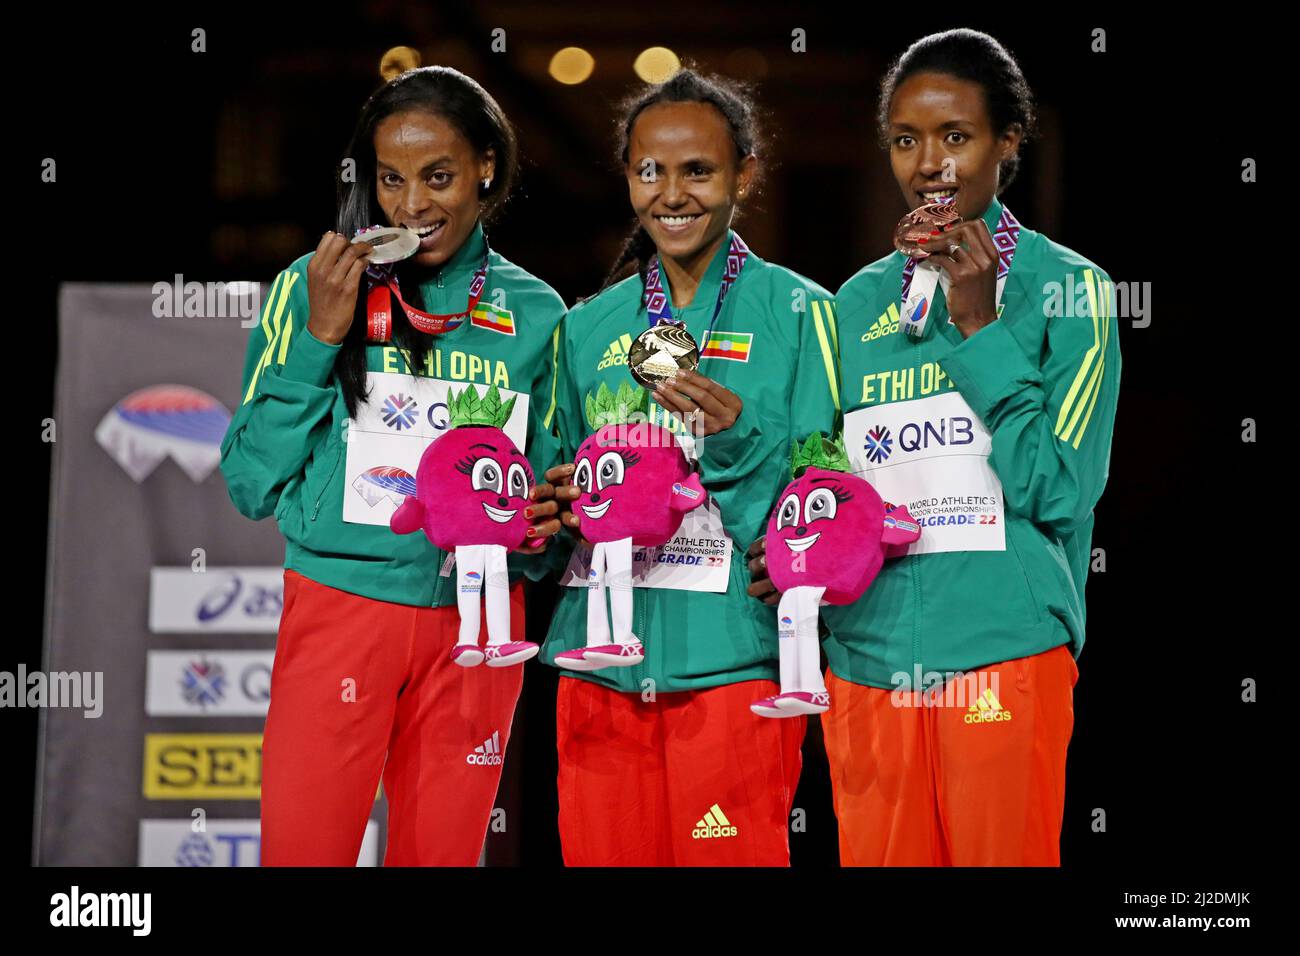 Women's 1,500m gold medalist Gudaf Tsegay (ETH), center, poses with silver medalist Axumawit Embaye (ETH) and bronze medalist Hirut Meshesha (ETH) dur Stock Photo